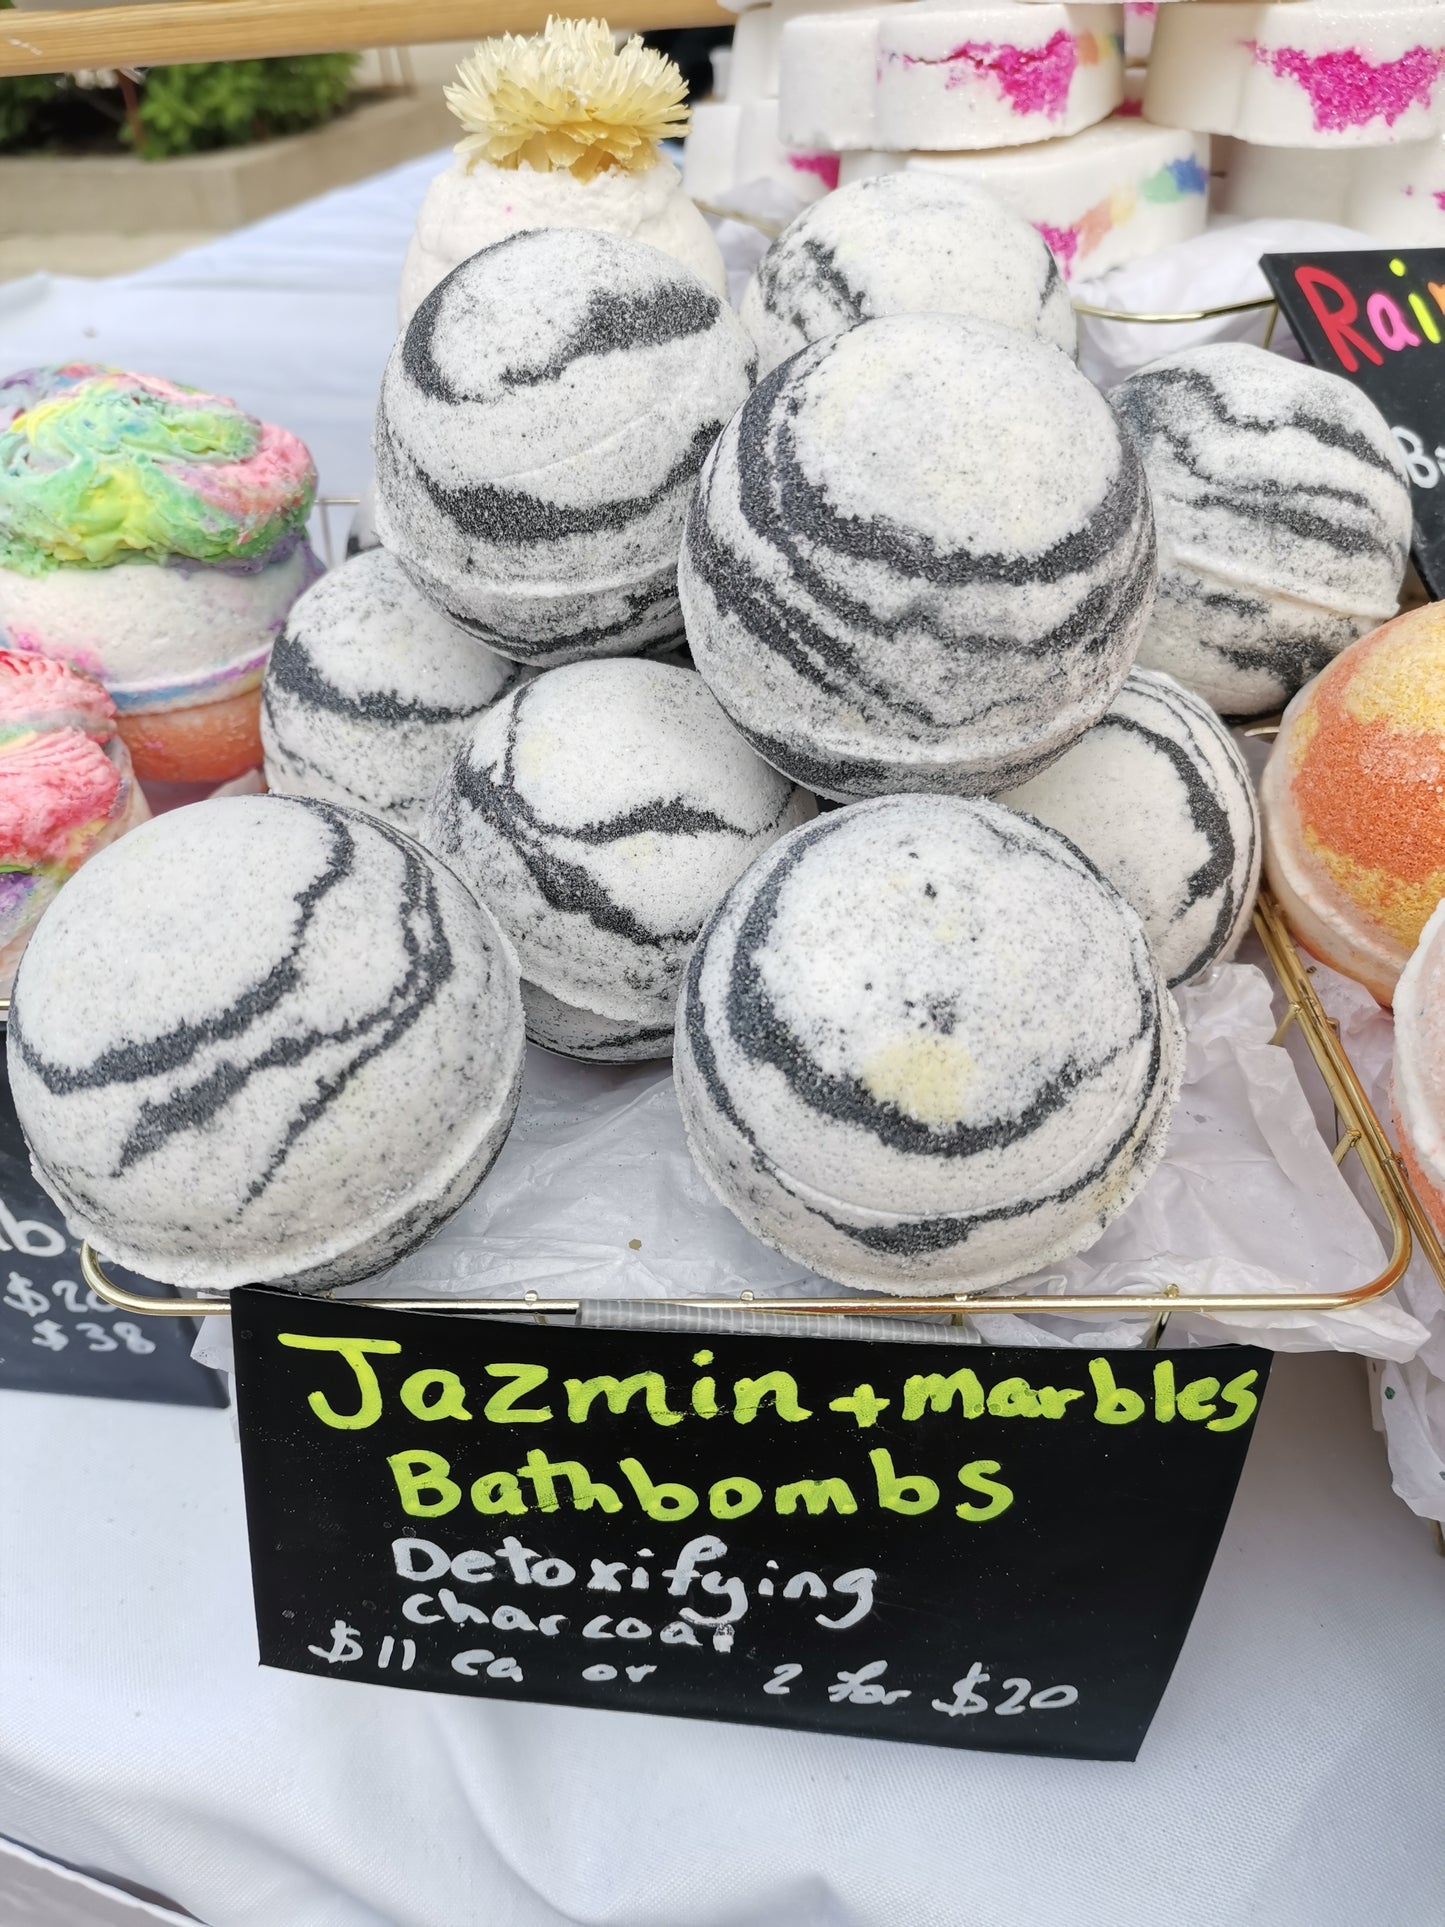 Jazmin + Marbles Large Bath Bombs |The Vegan Potionry |